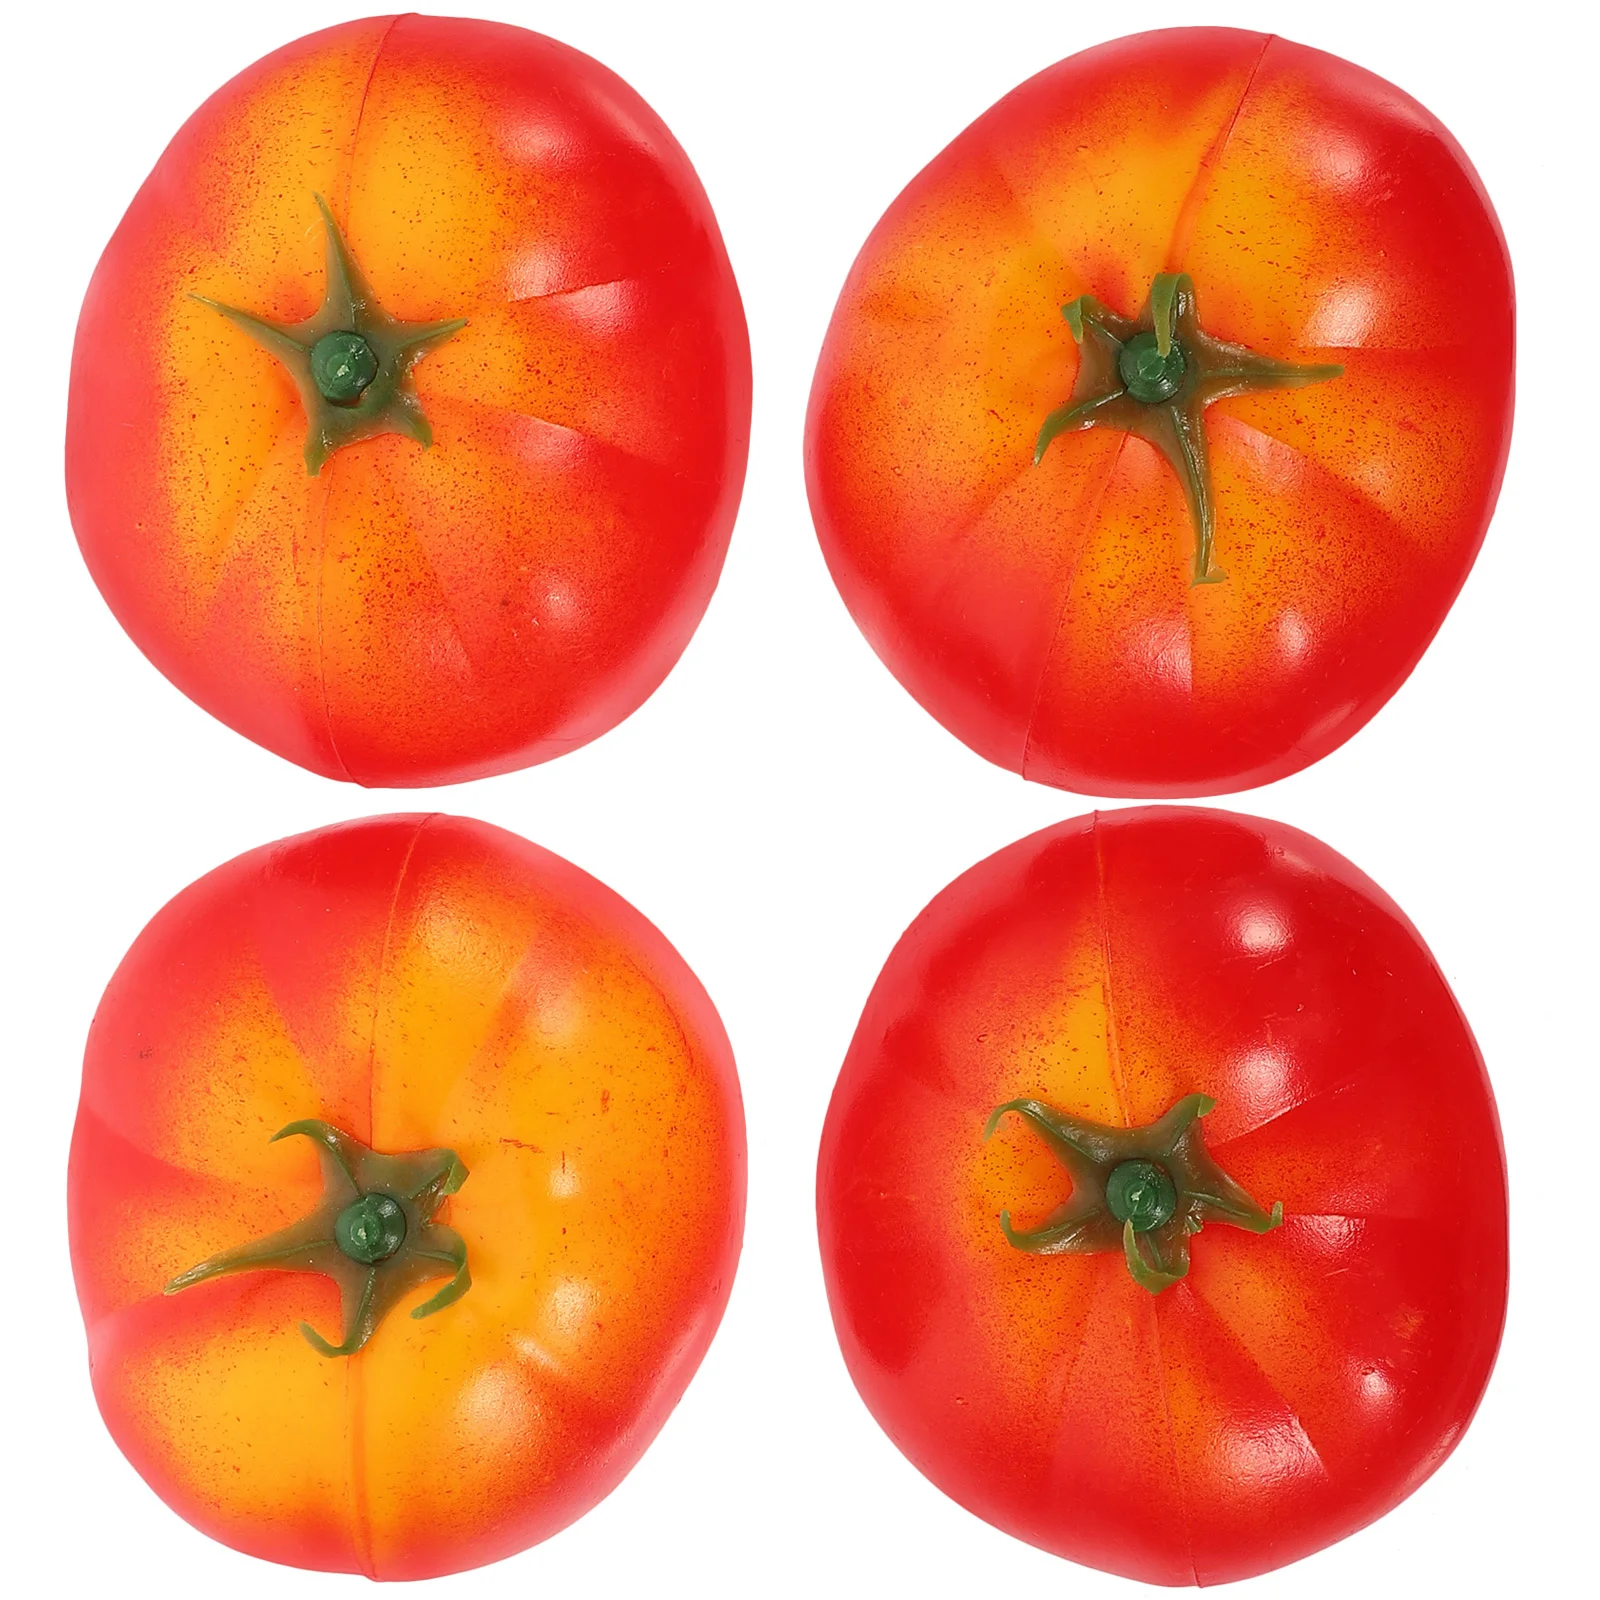 

4 Pcs Imitation Tomato Vegetable Props Fruit Plants Simulated Models Lifelike Fake Plastic Artificial Tomatoes Toddler Faux